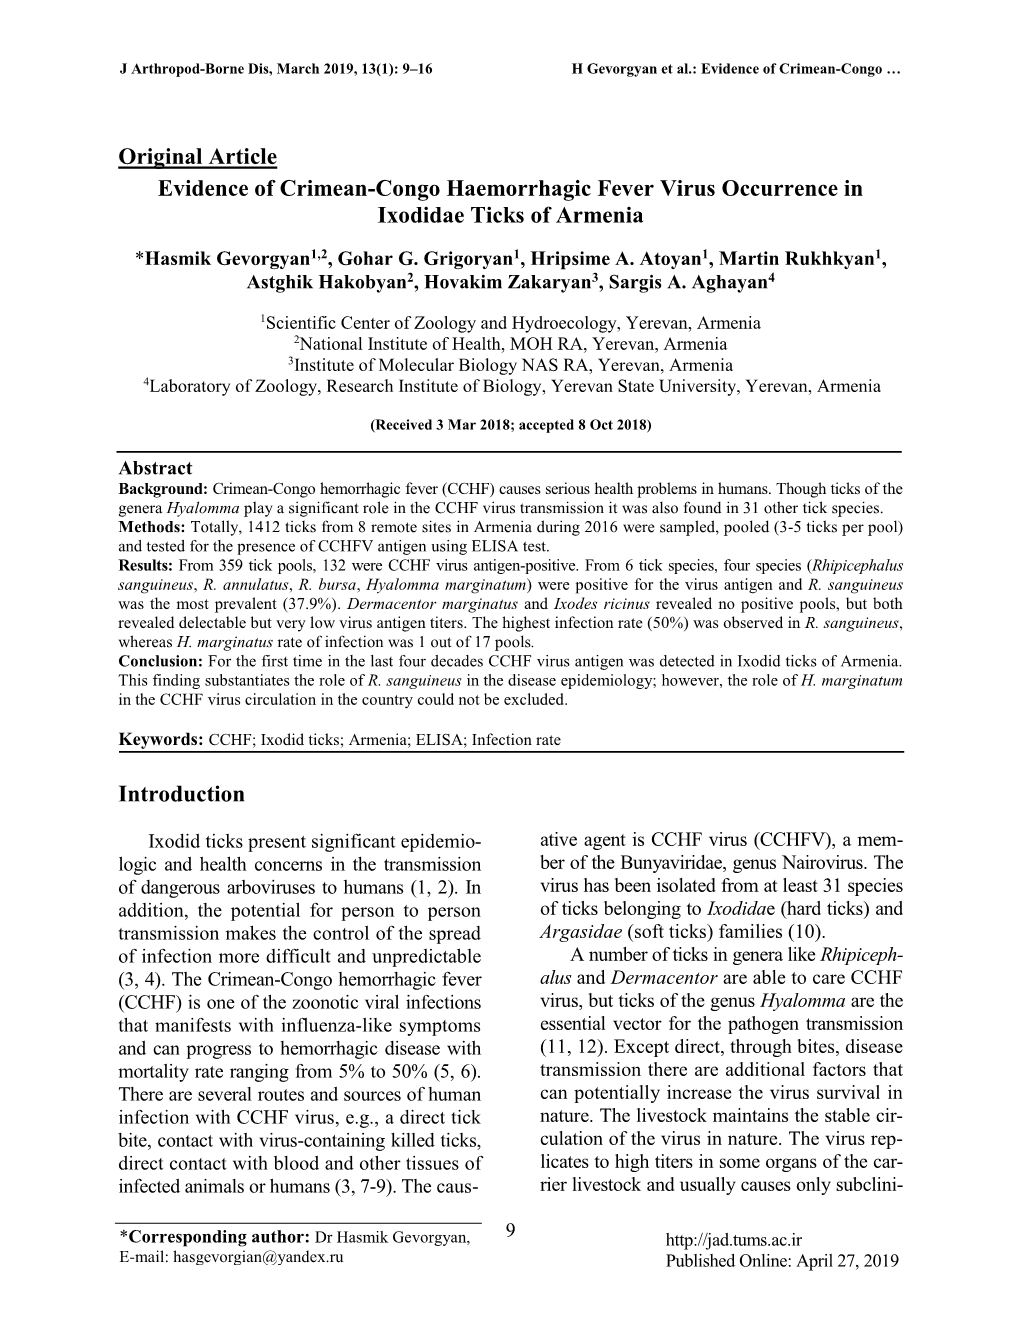 Evidence of Crimean-Congo Haemorrhagic Fever Virus Occurrence in Ixodidae Ticks of Armenia